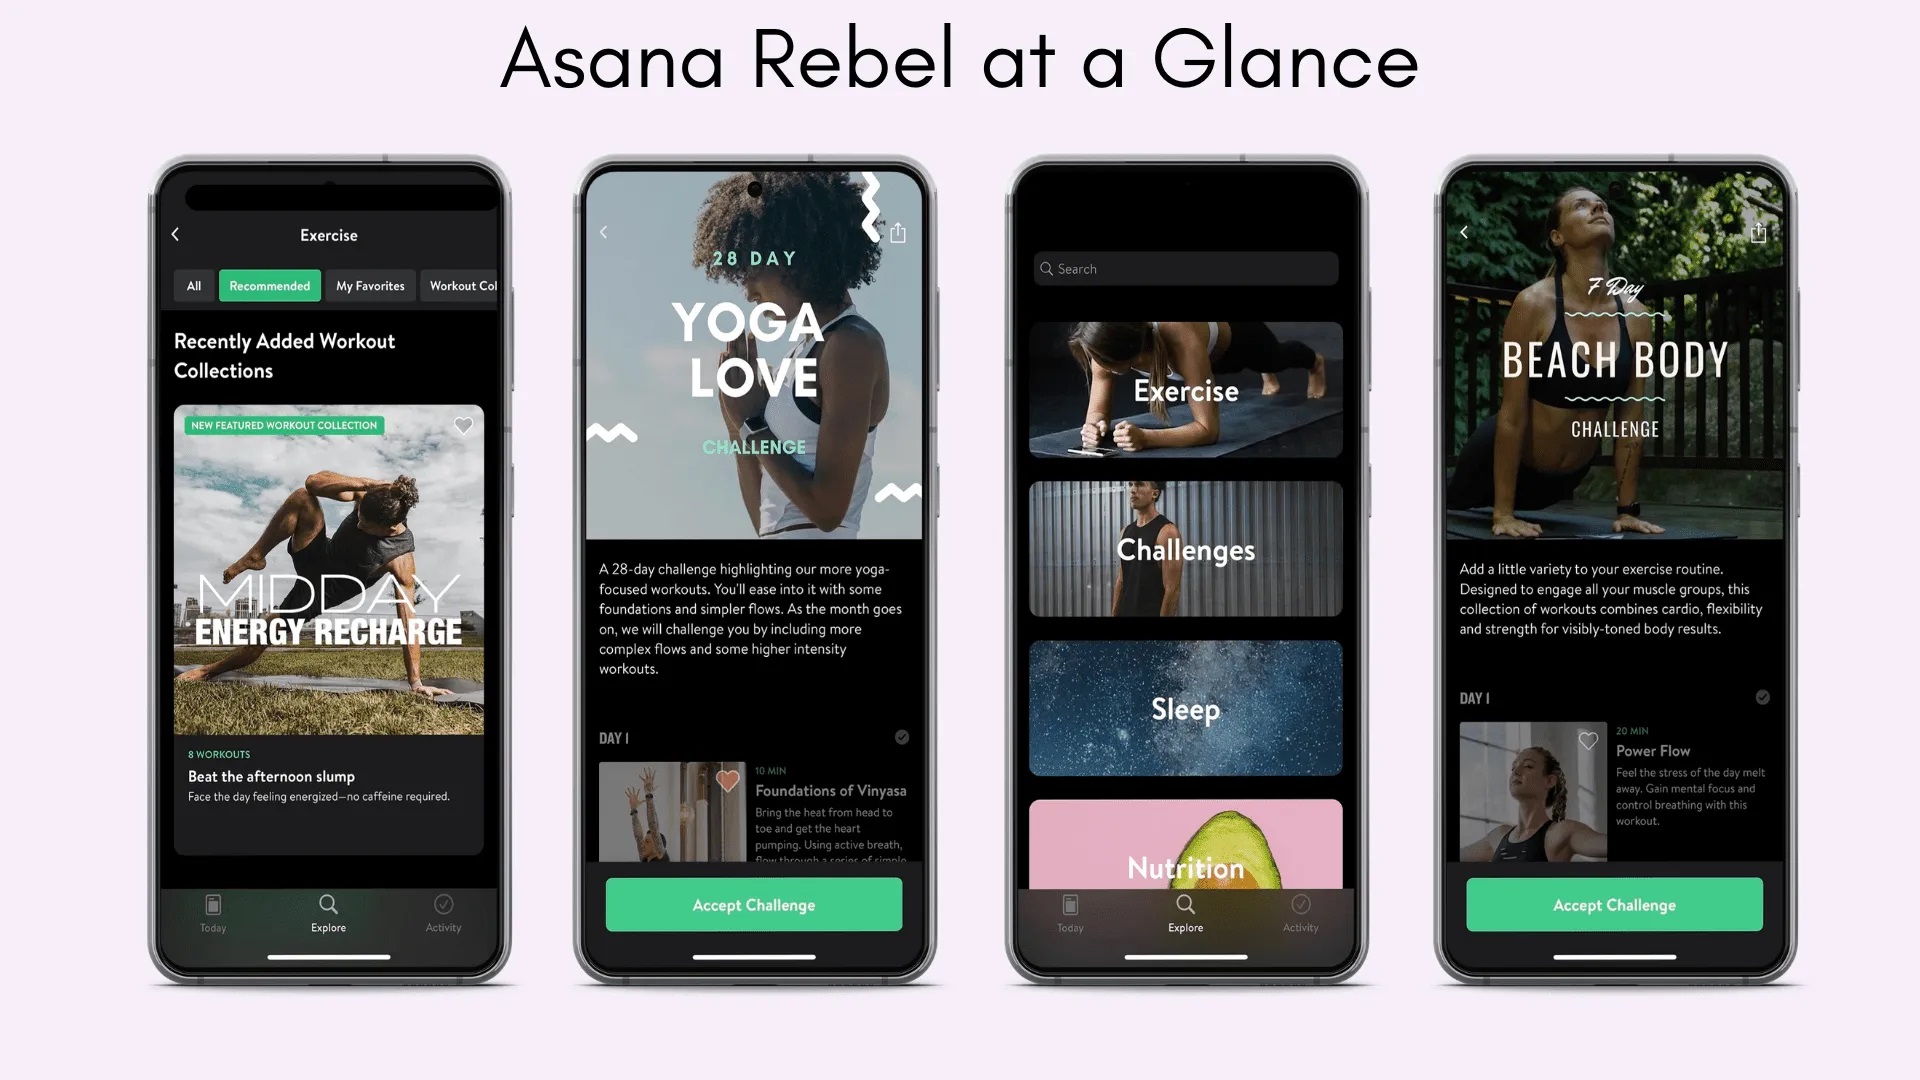 What is Asana Rebel